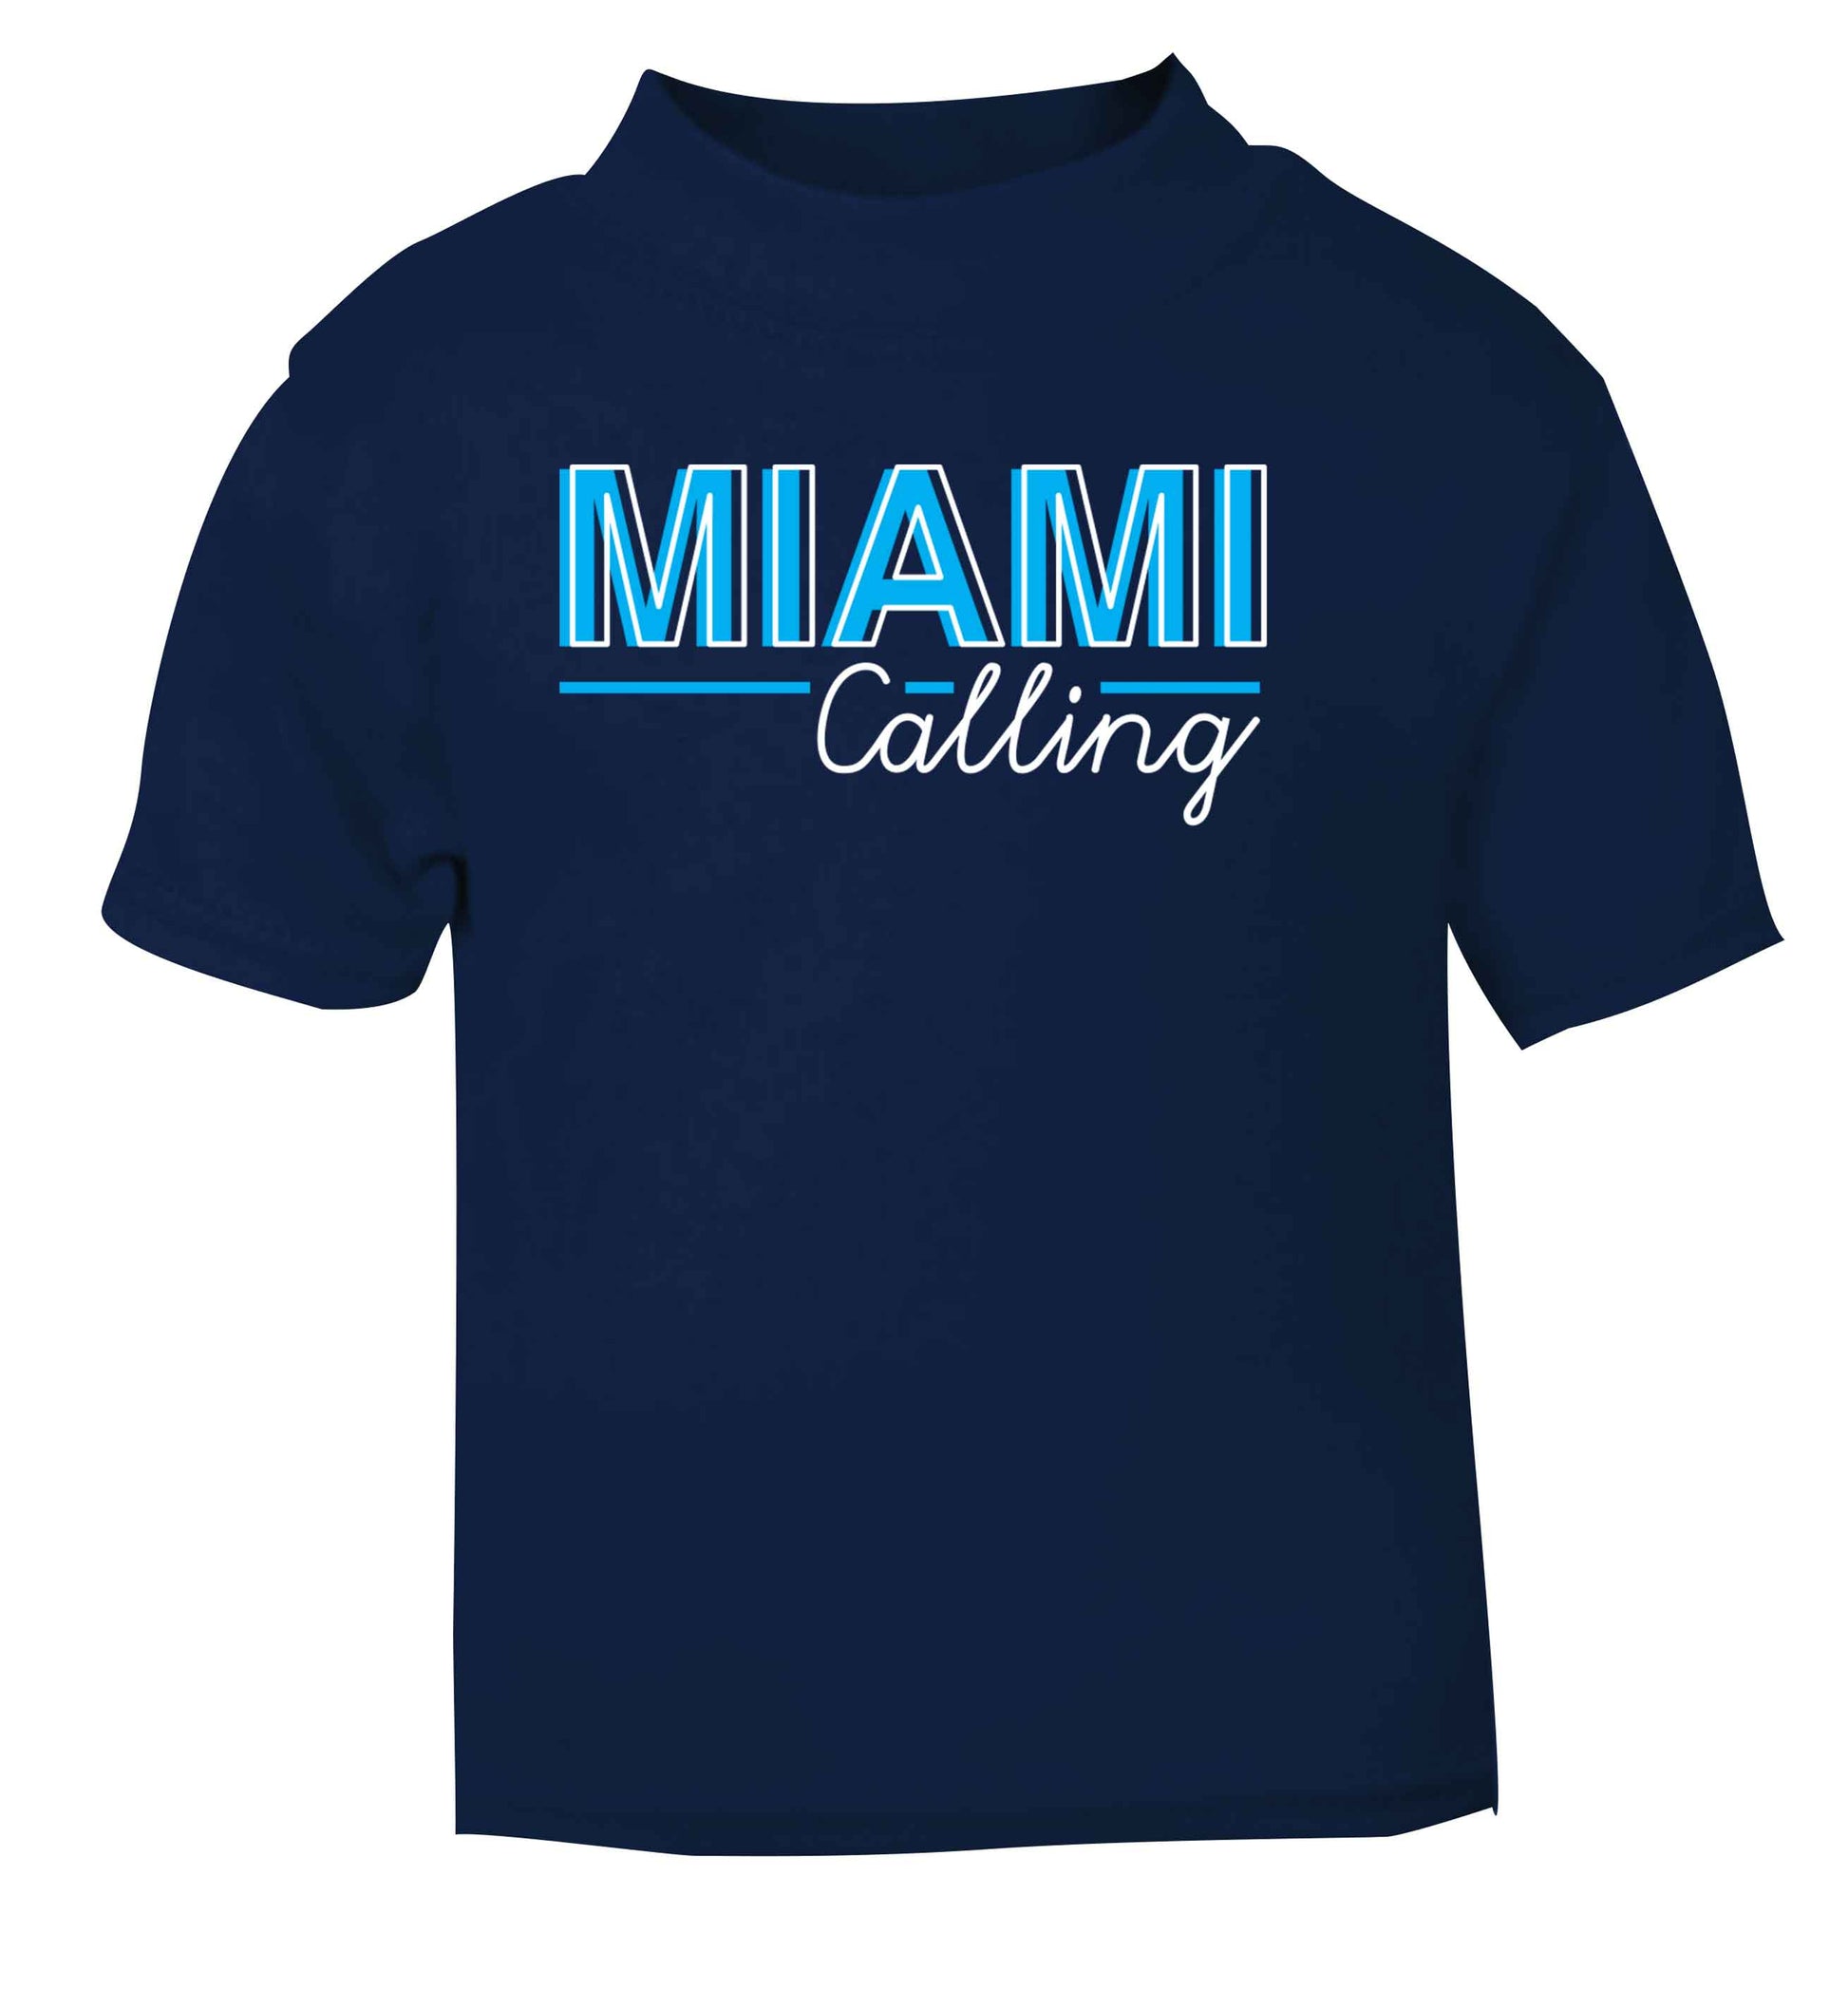 Miami calling navy Baby Toddler Tshirt 2 Years